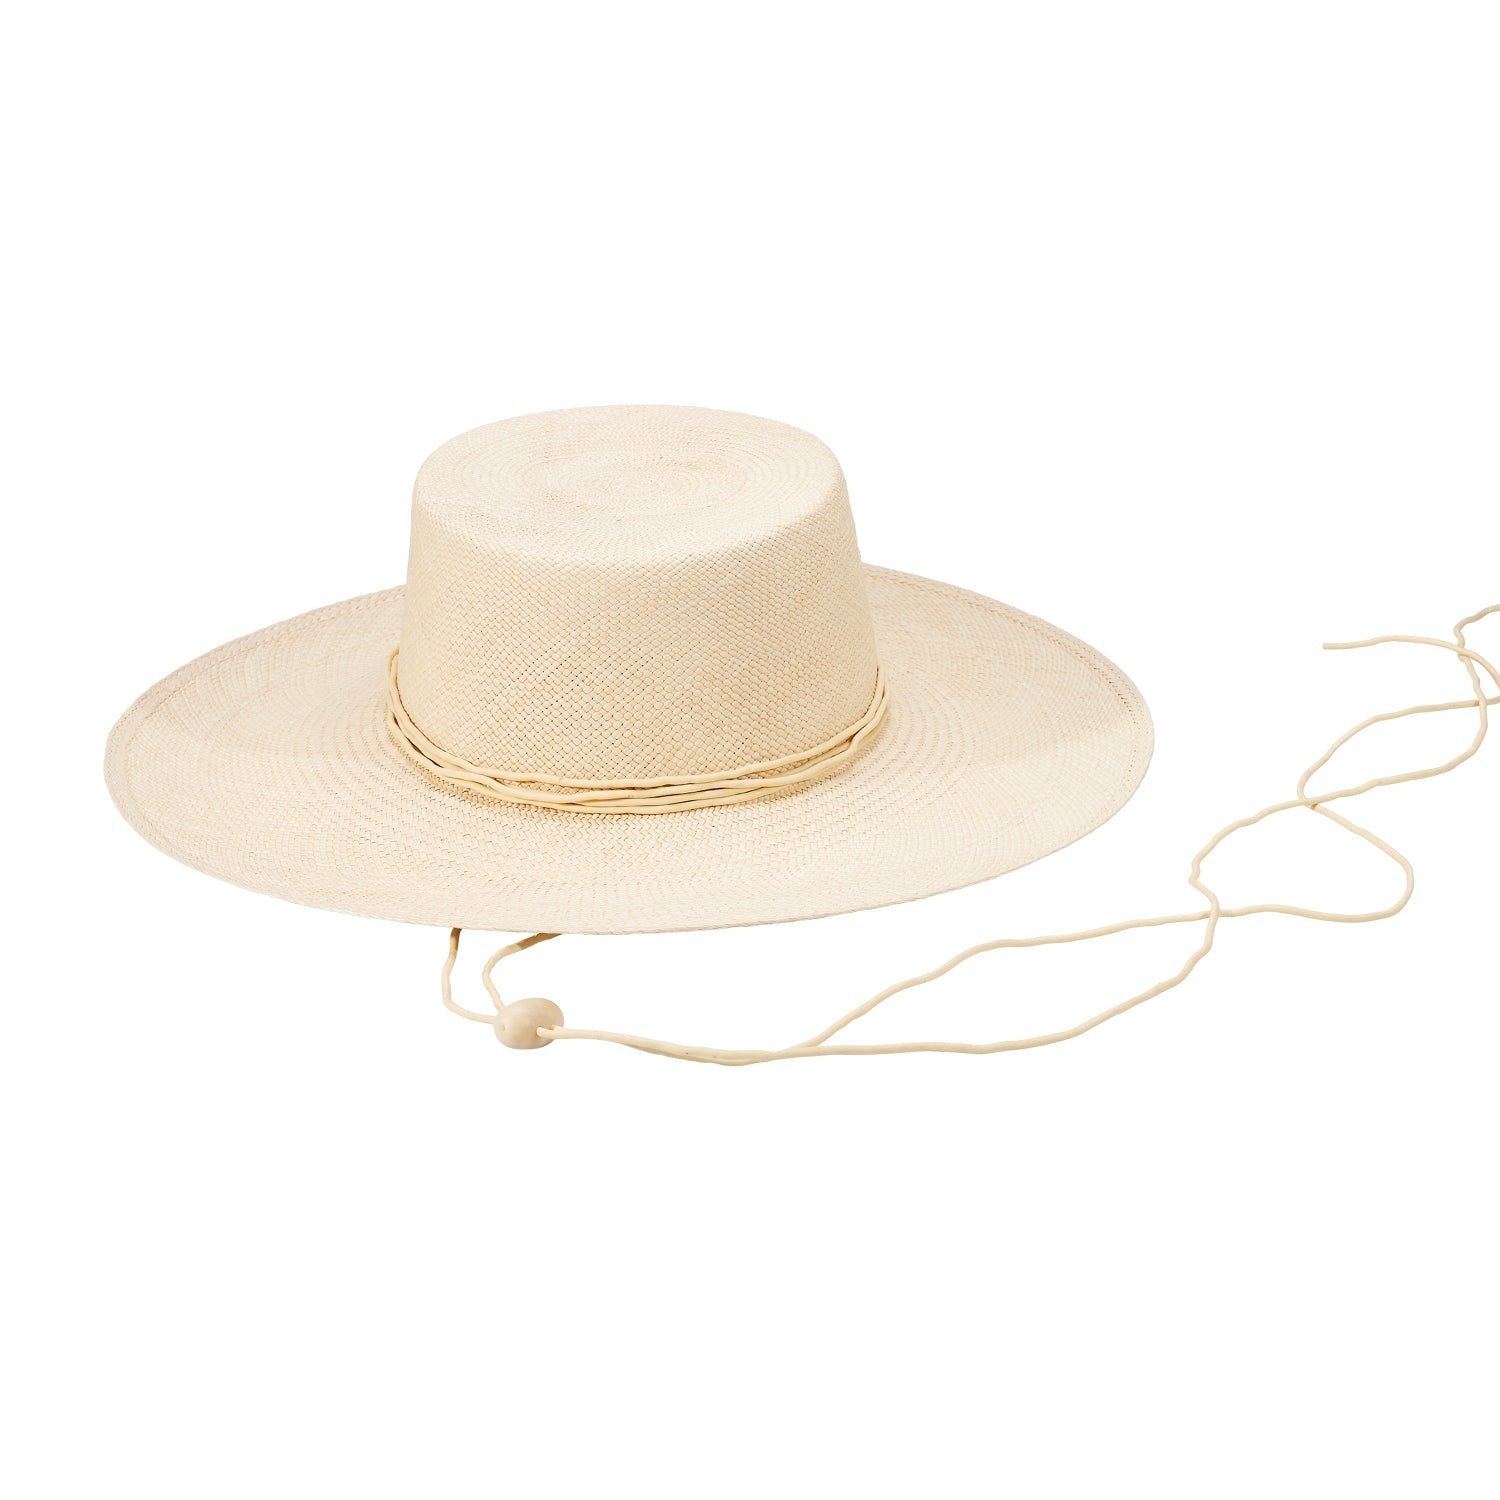 Jacaranda - Hat artesano